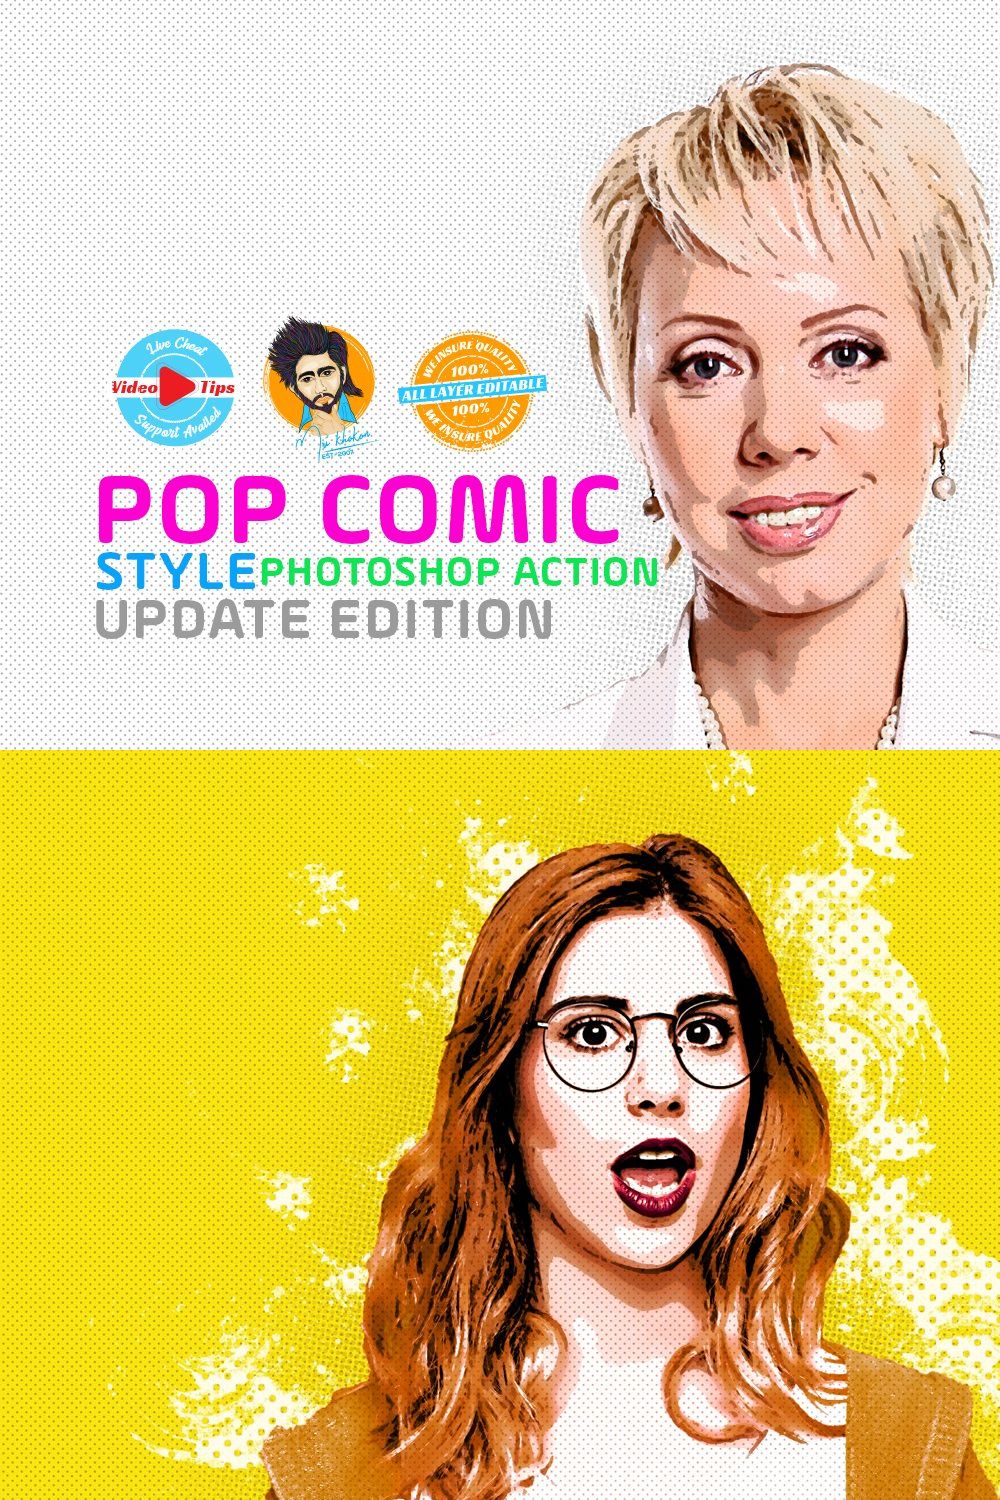 Pop Comic Style Photoshop Action pinterest preview image.